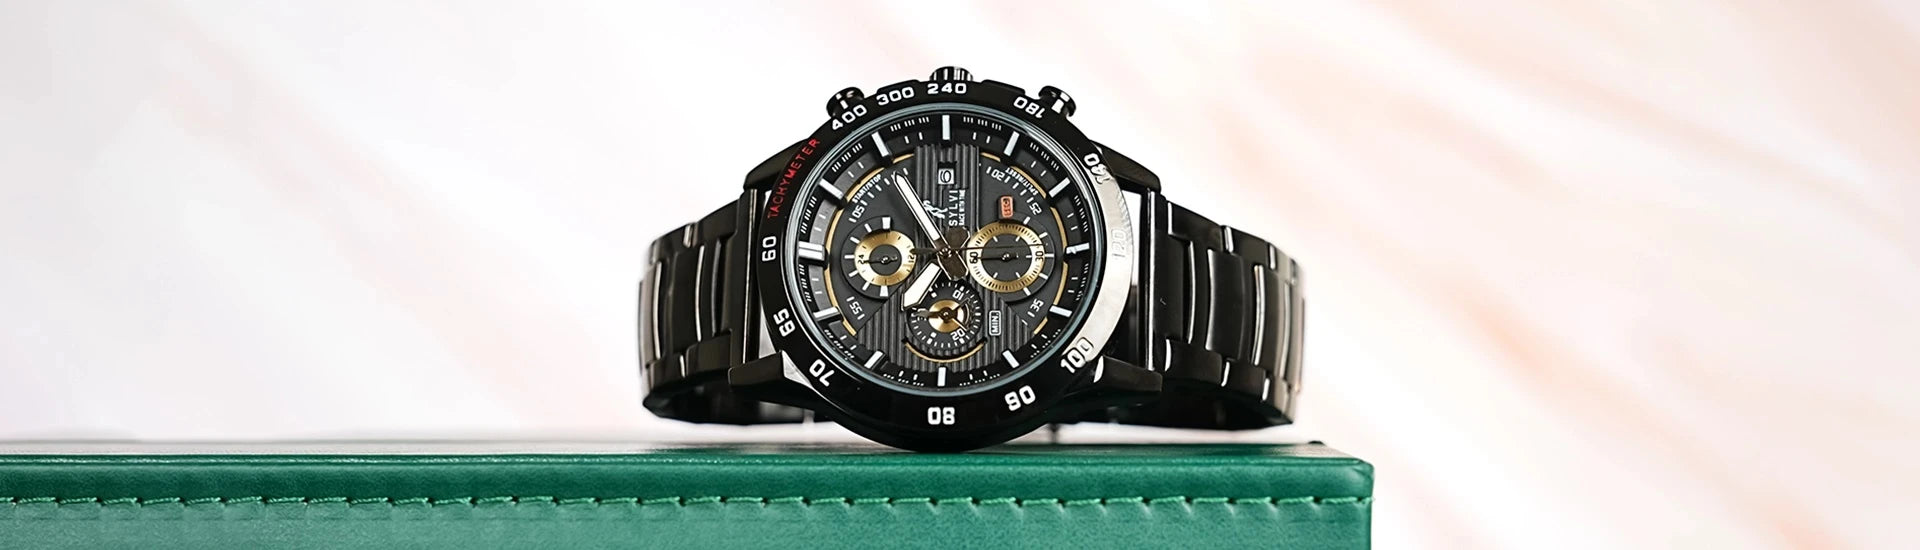 YSYH Men Watch Luxury Brand Stainless Steel Wrist Watch